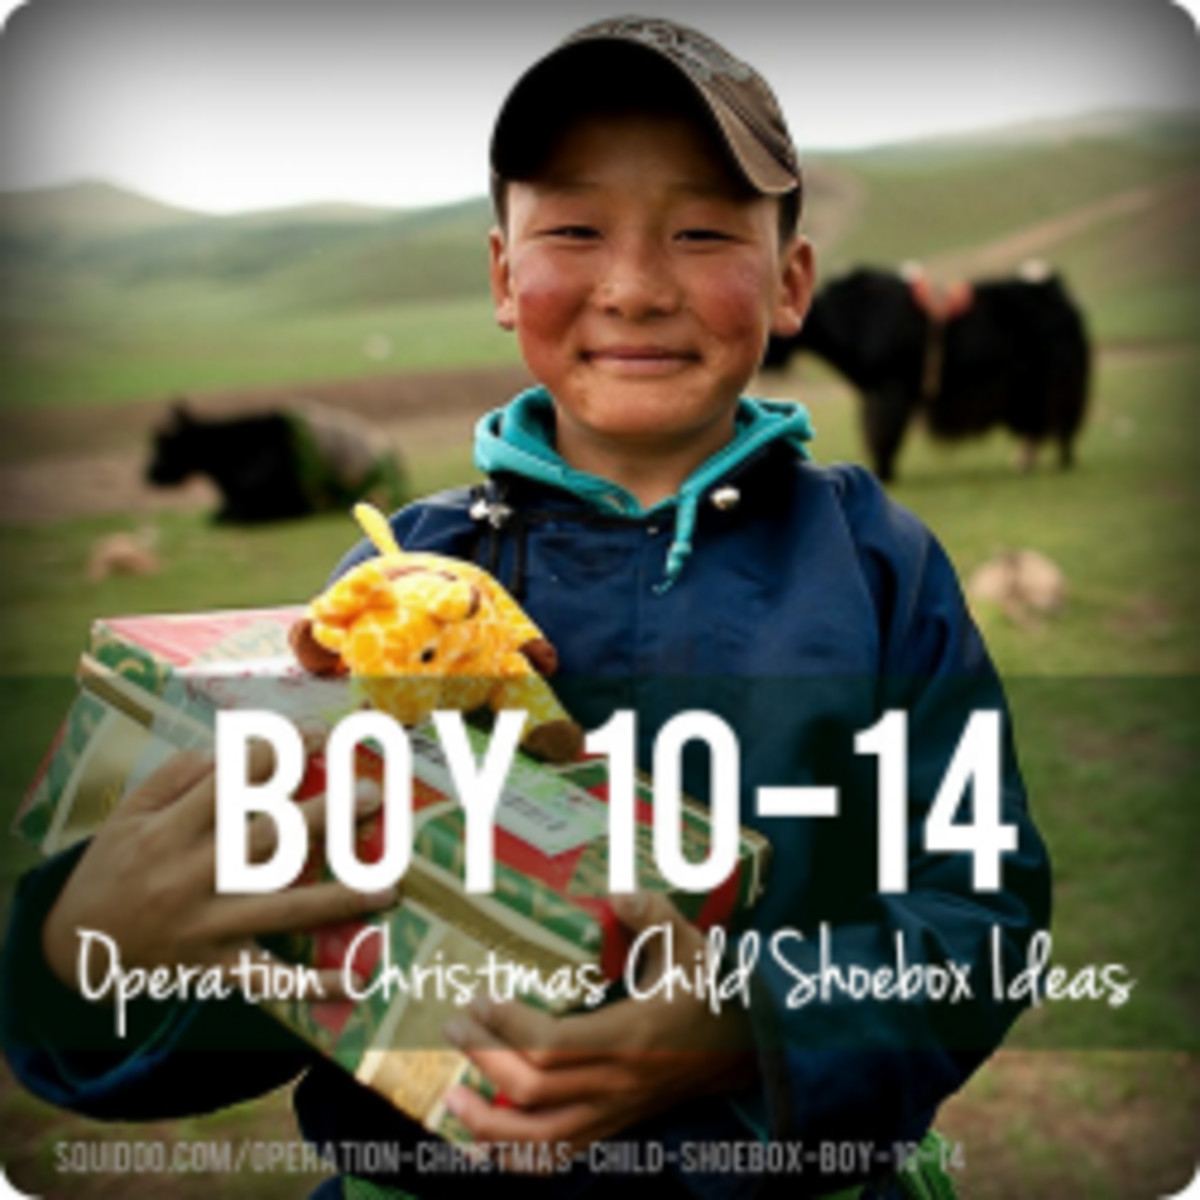 Gift Ideas For Boys Age 14
 Operation Christmas Child Shoebox Ideas for Boys Aged 10